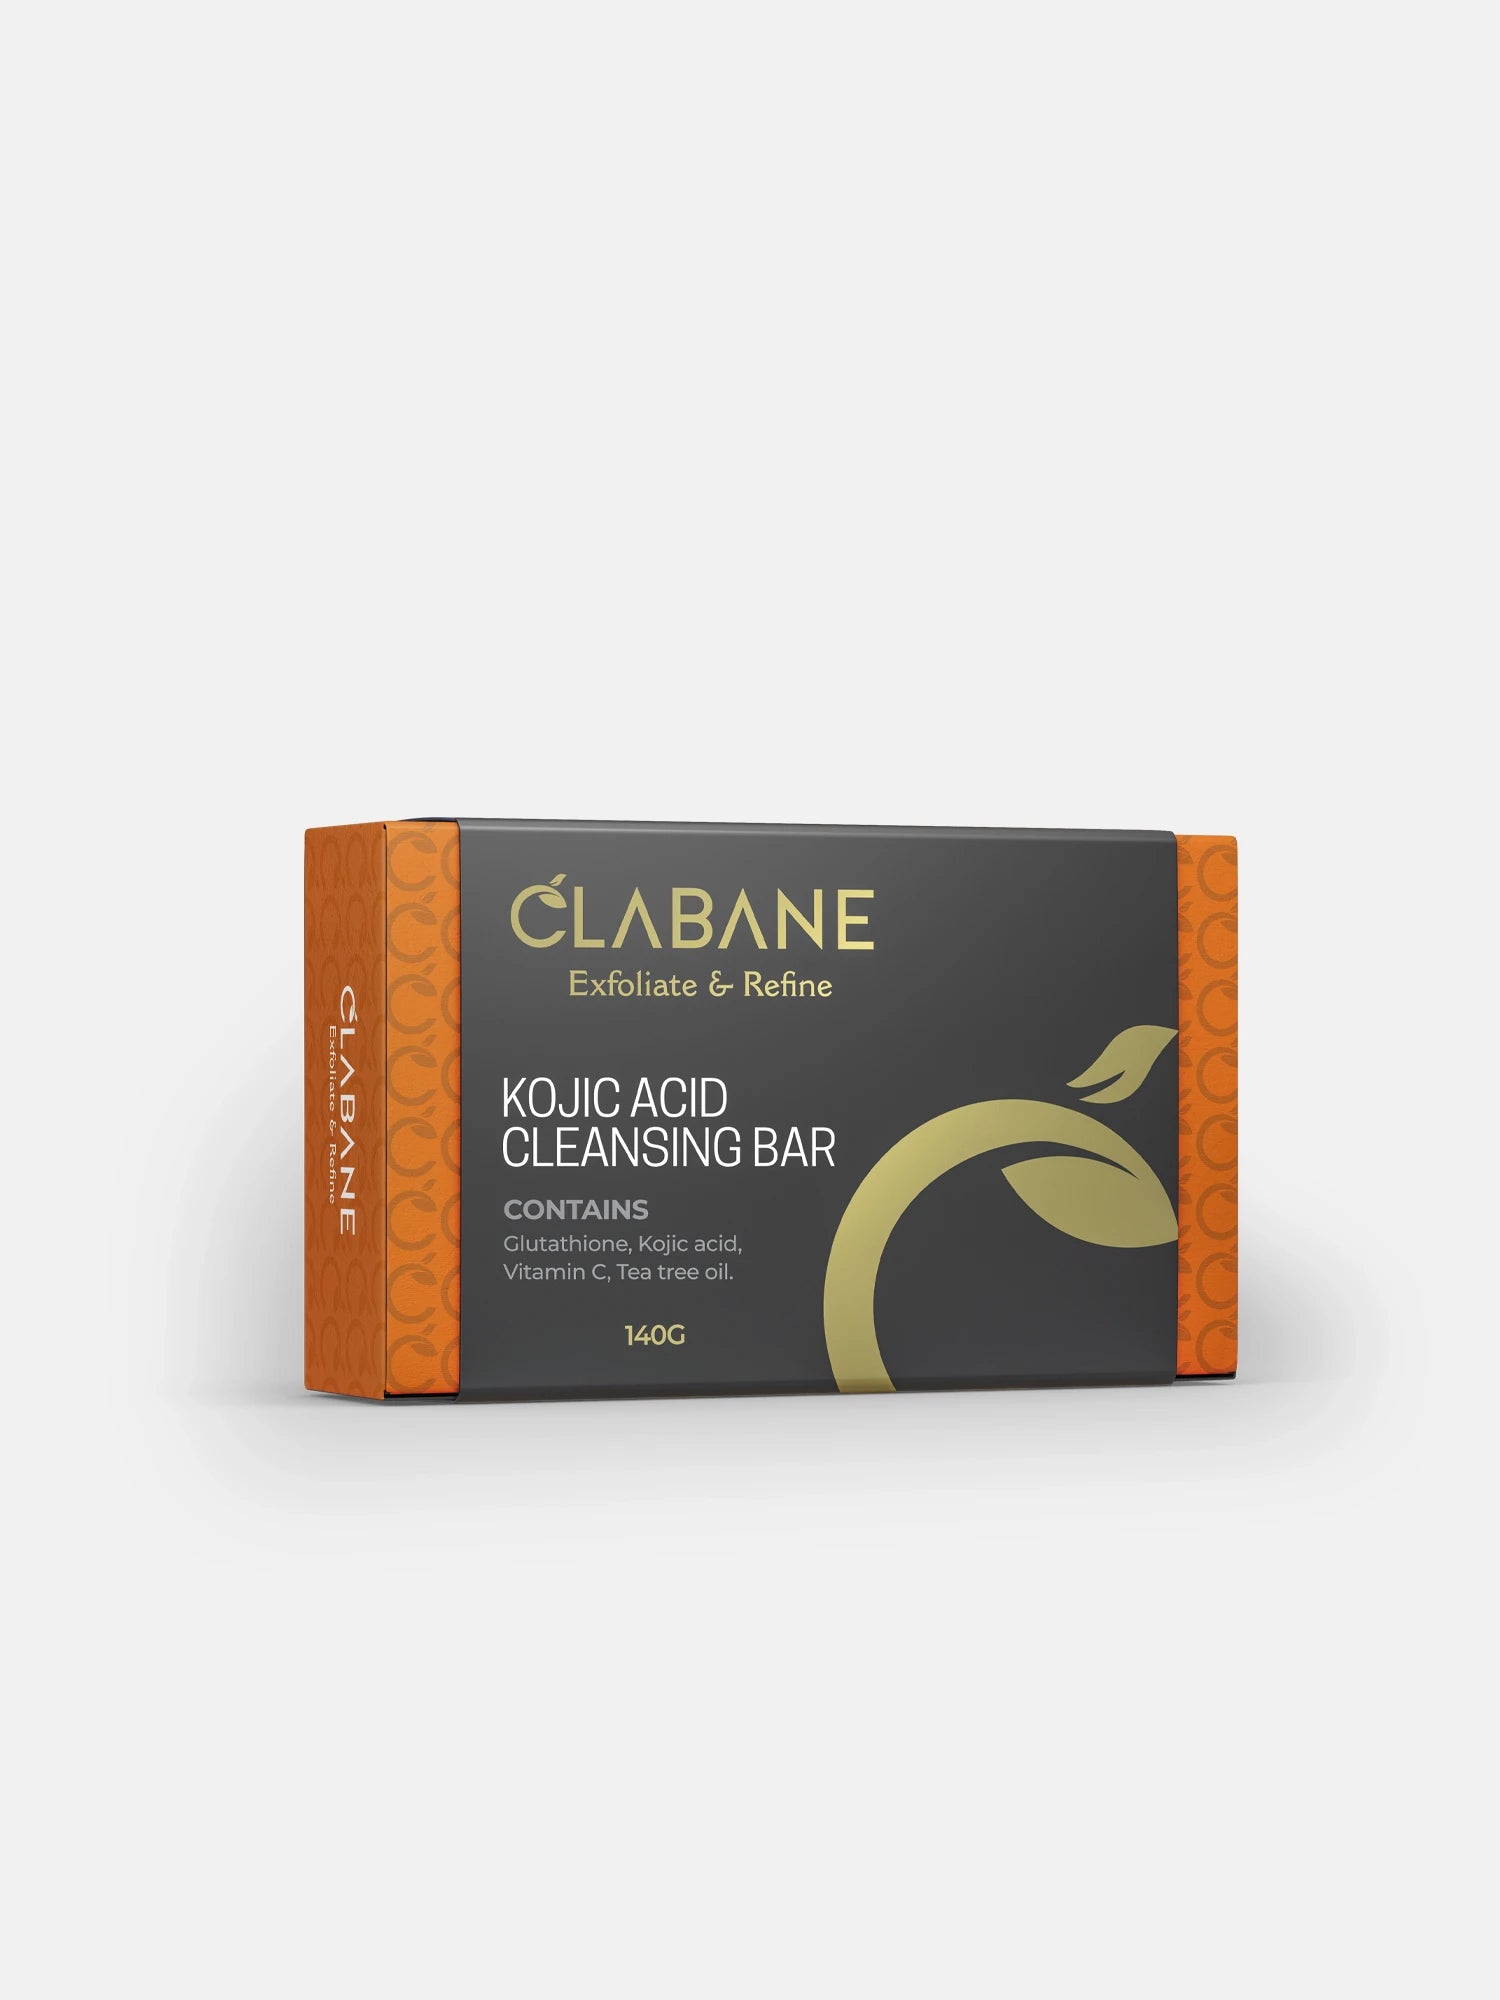 Clabane Exfoliate and Refine Kojic Acid Cleansing Bar